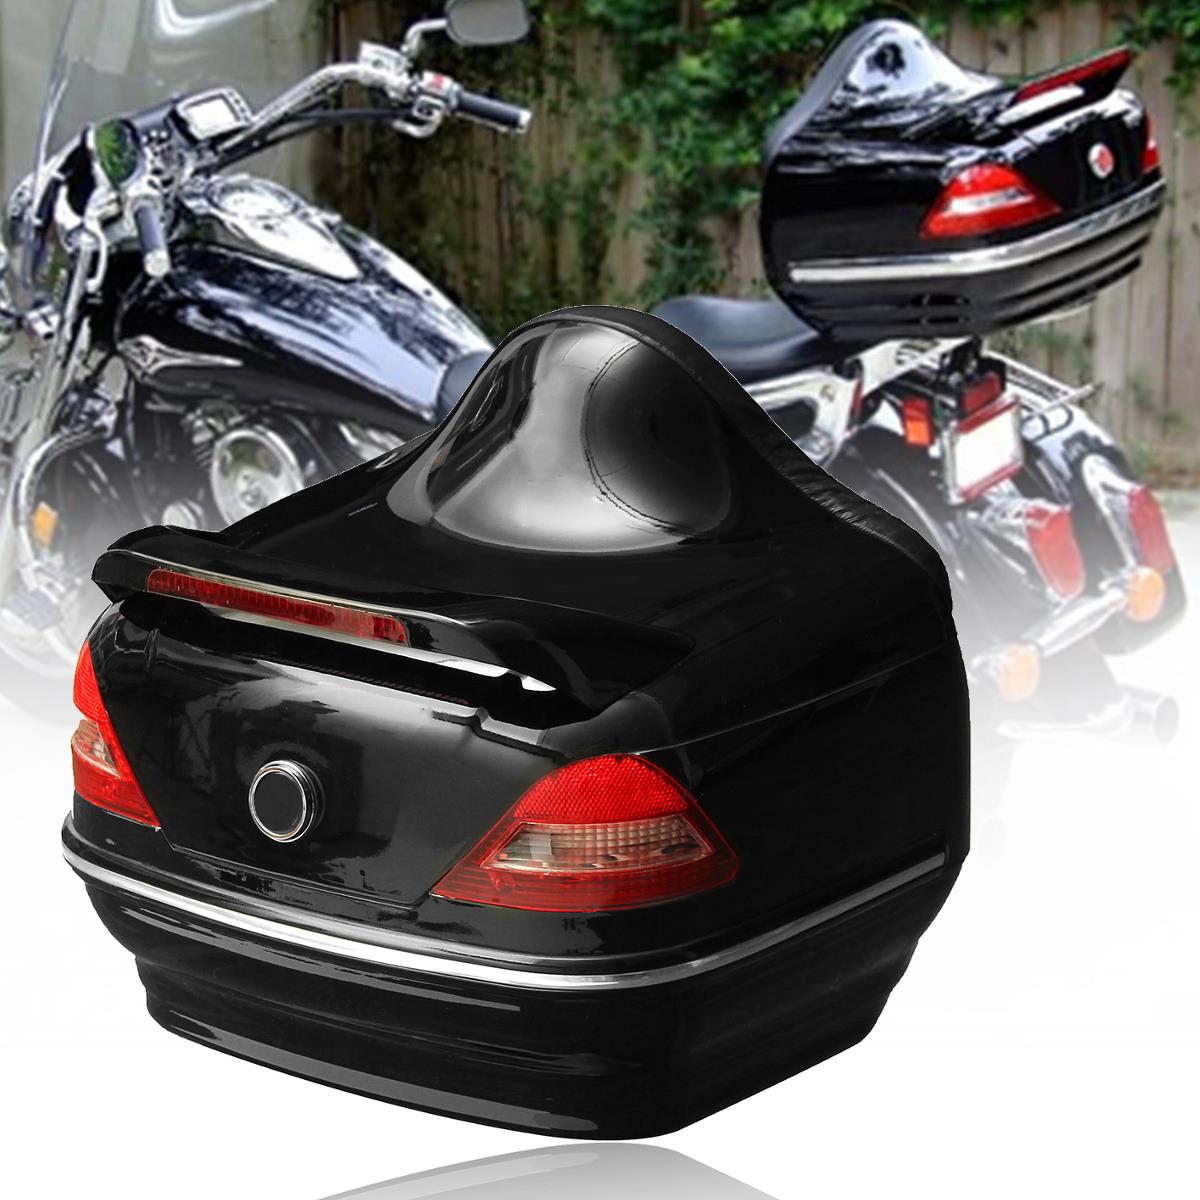 26L Motorcycle Trunk Tail Box with Taillight Black For Harley Honda Yamaha Suzuki Vulcan Cruiser